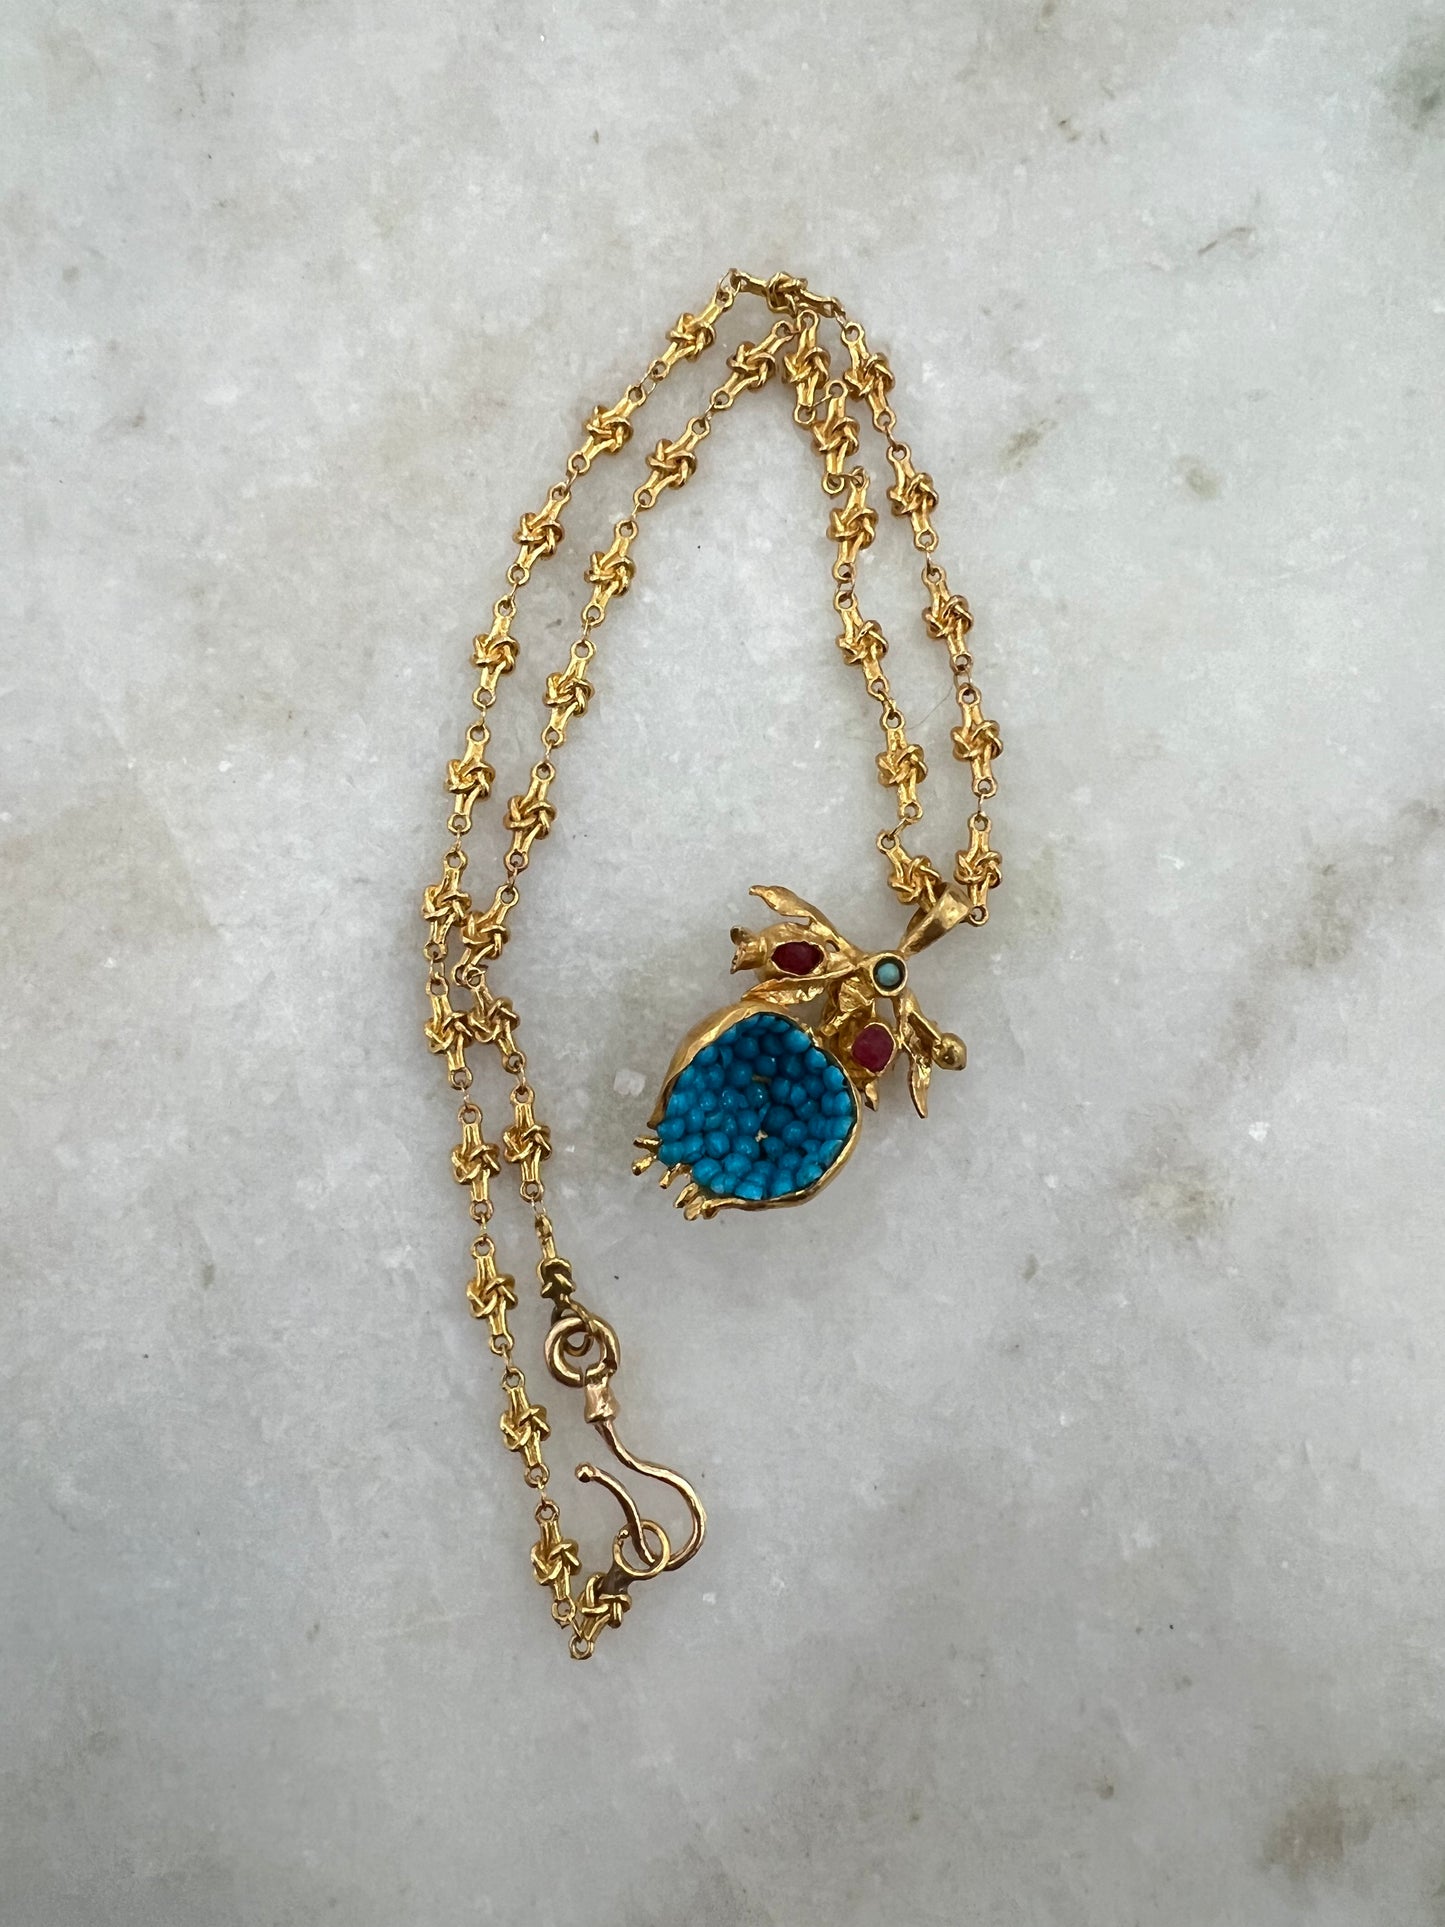 Handmade Turkish Necklace